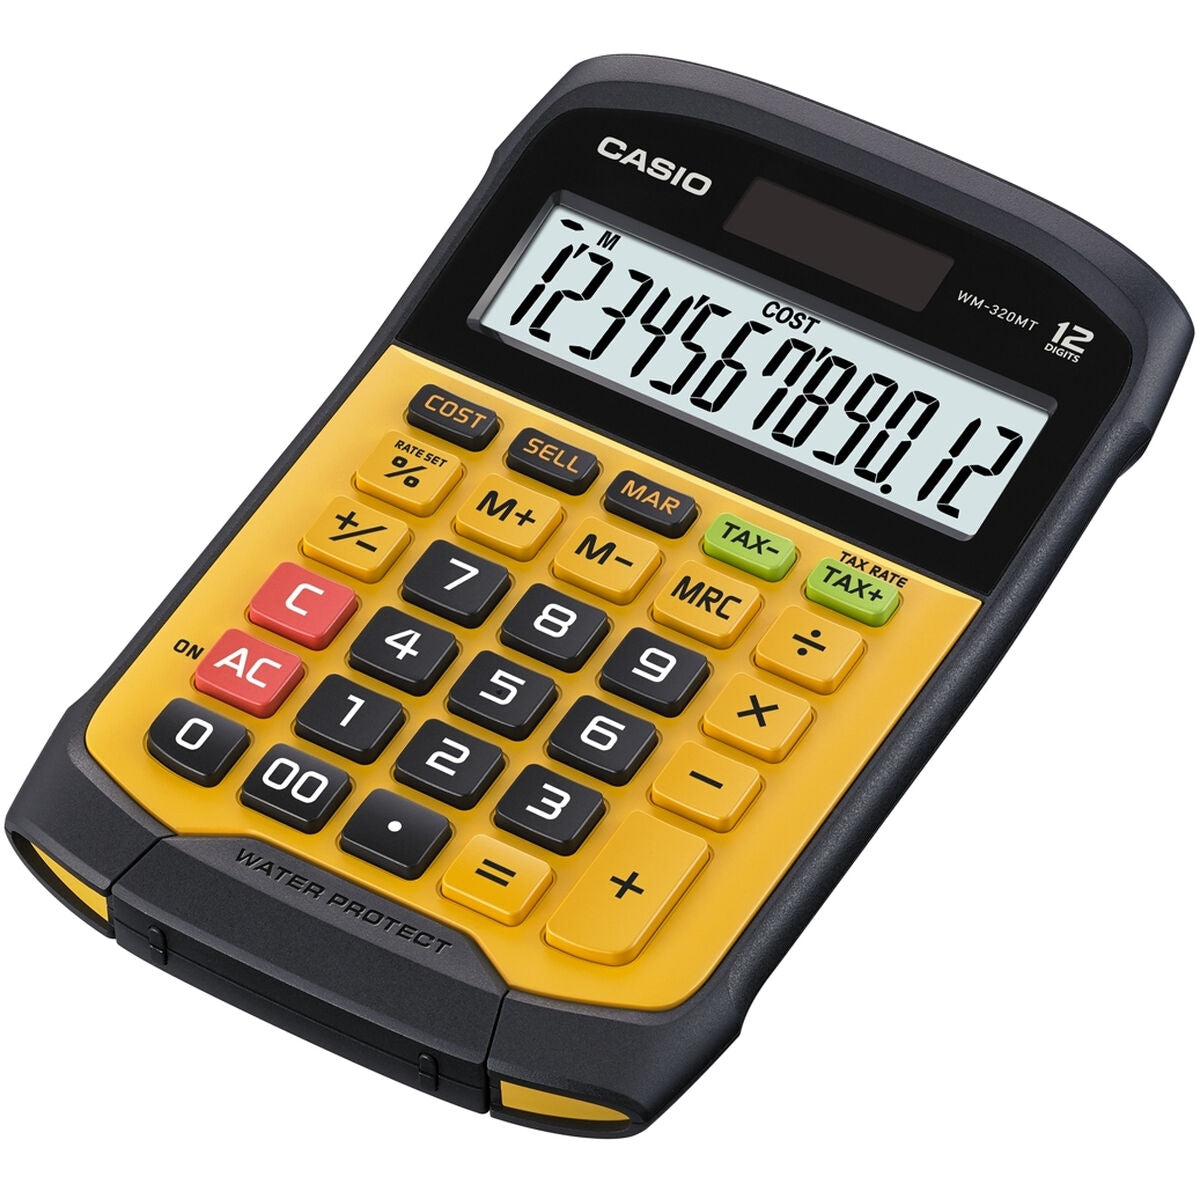 Kalkulator Casio WM-320MT